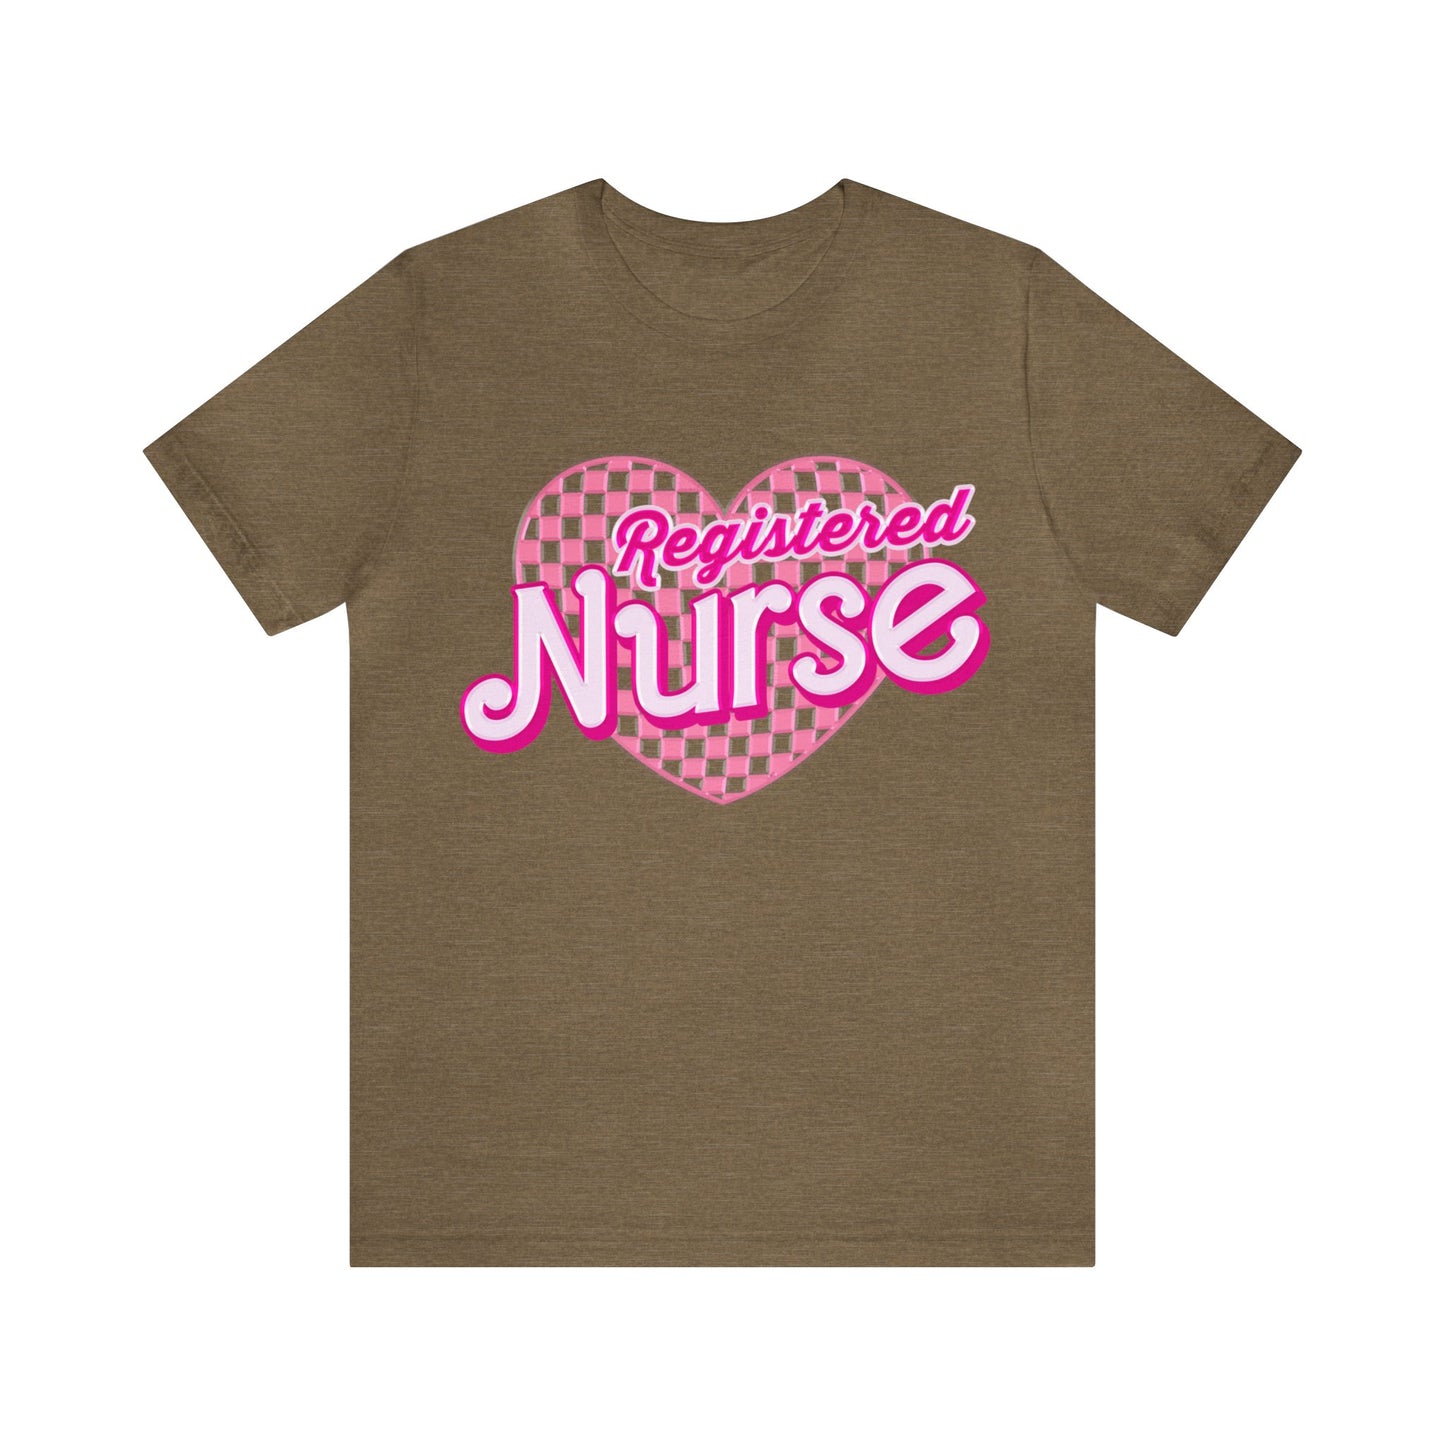 Registered Nurse Shirt for Women, RN TShirt for Registered Nurse Nursing T-Shirt for Nurse, Registered Nurse Gift, RN Graduation Gift, T1496